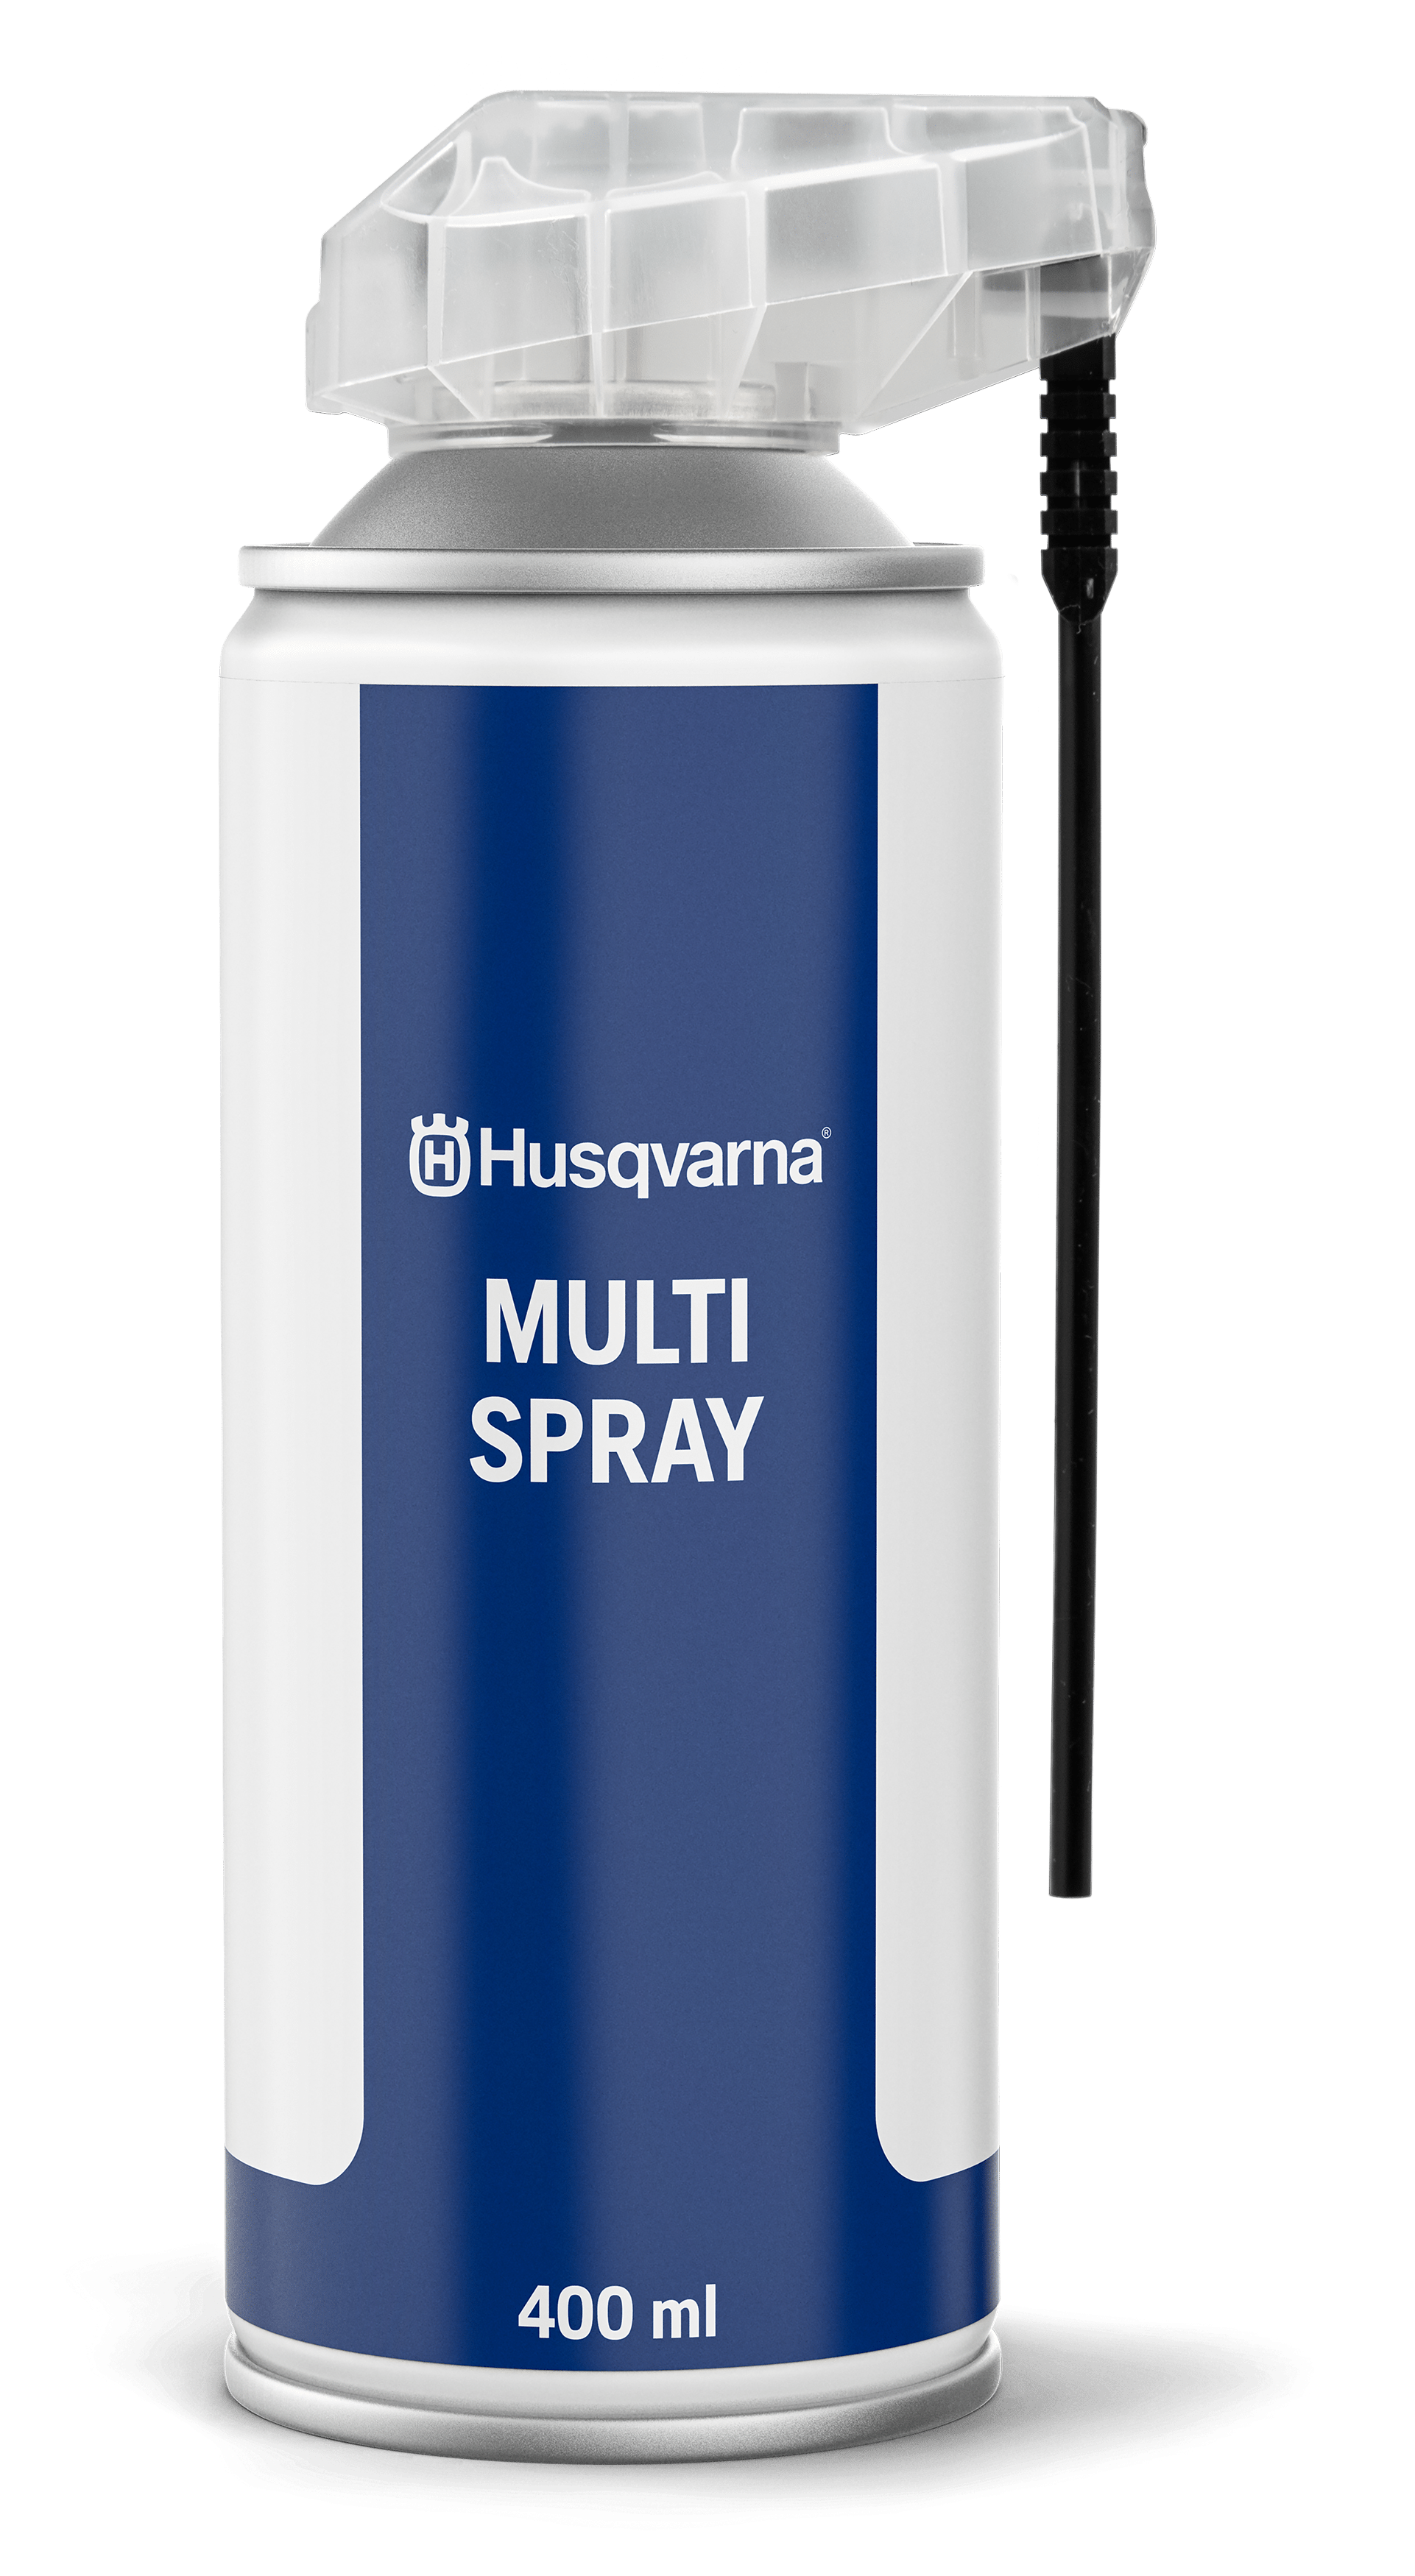 Multi spray